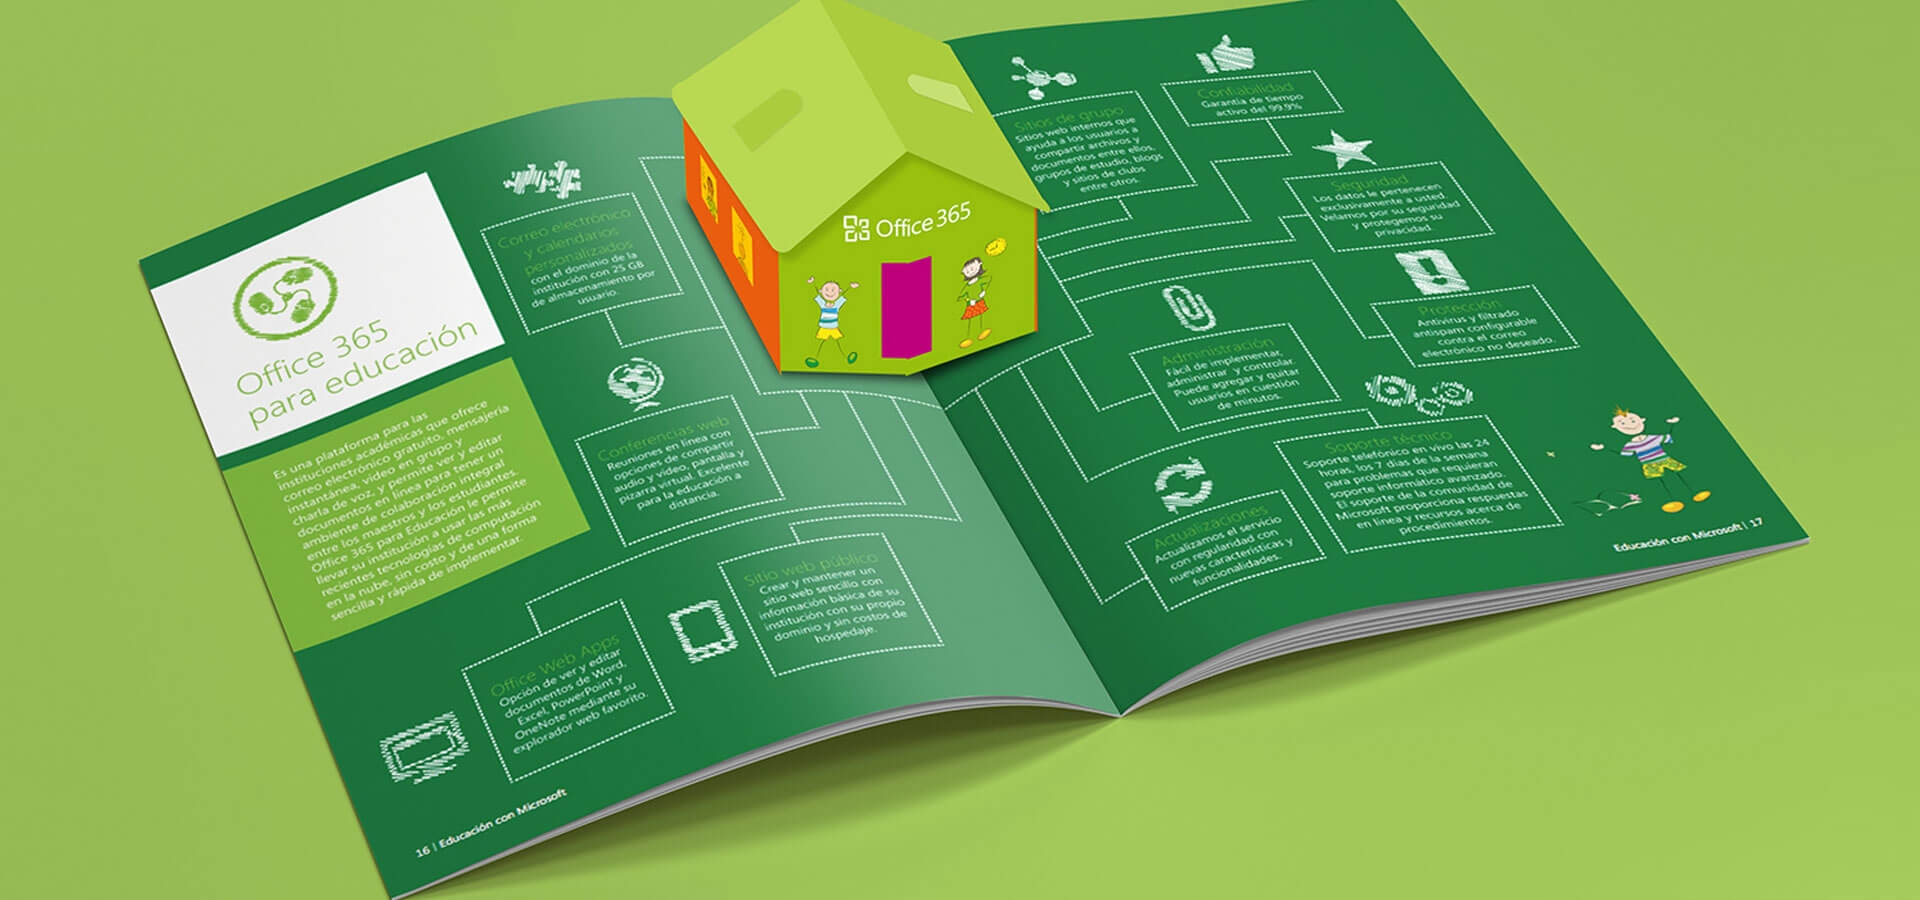 19+ 3D Pop Up Brochure Designs | Free & Premium Templates Inside Pop Up Brochure Template